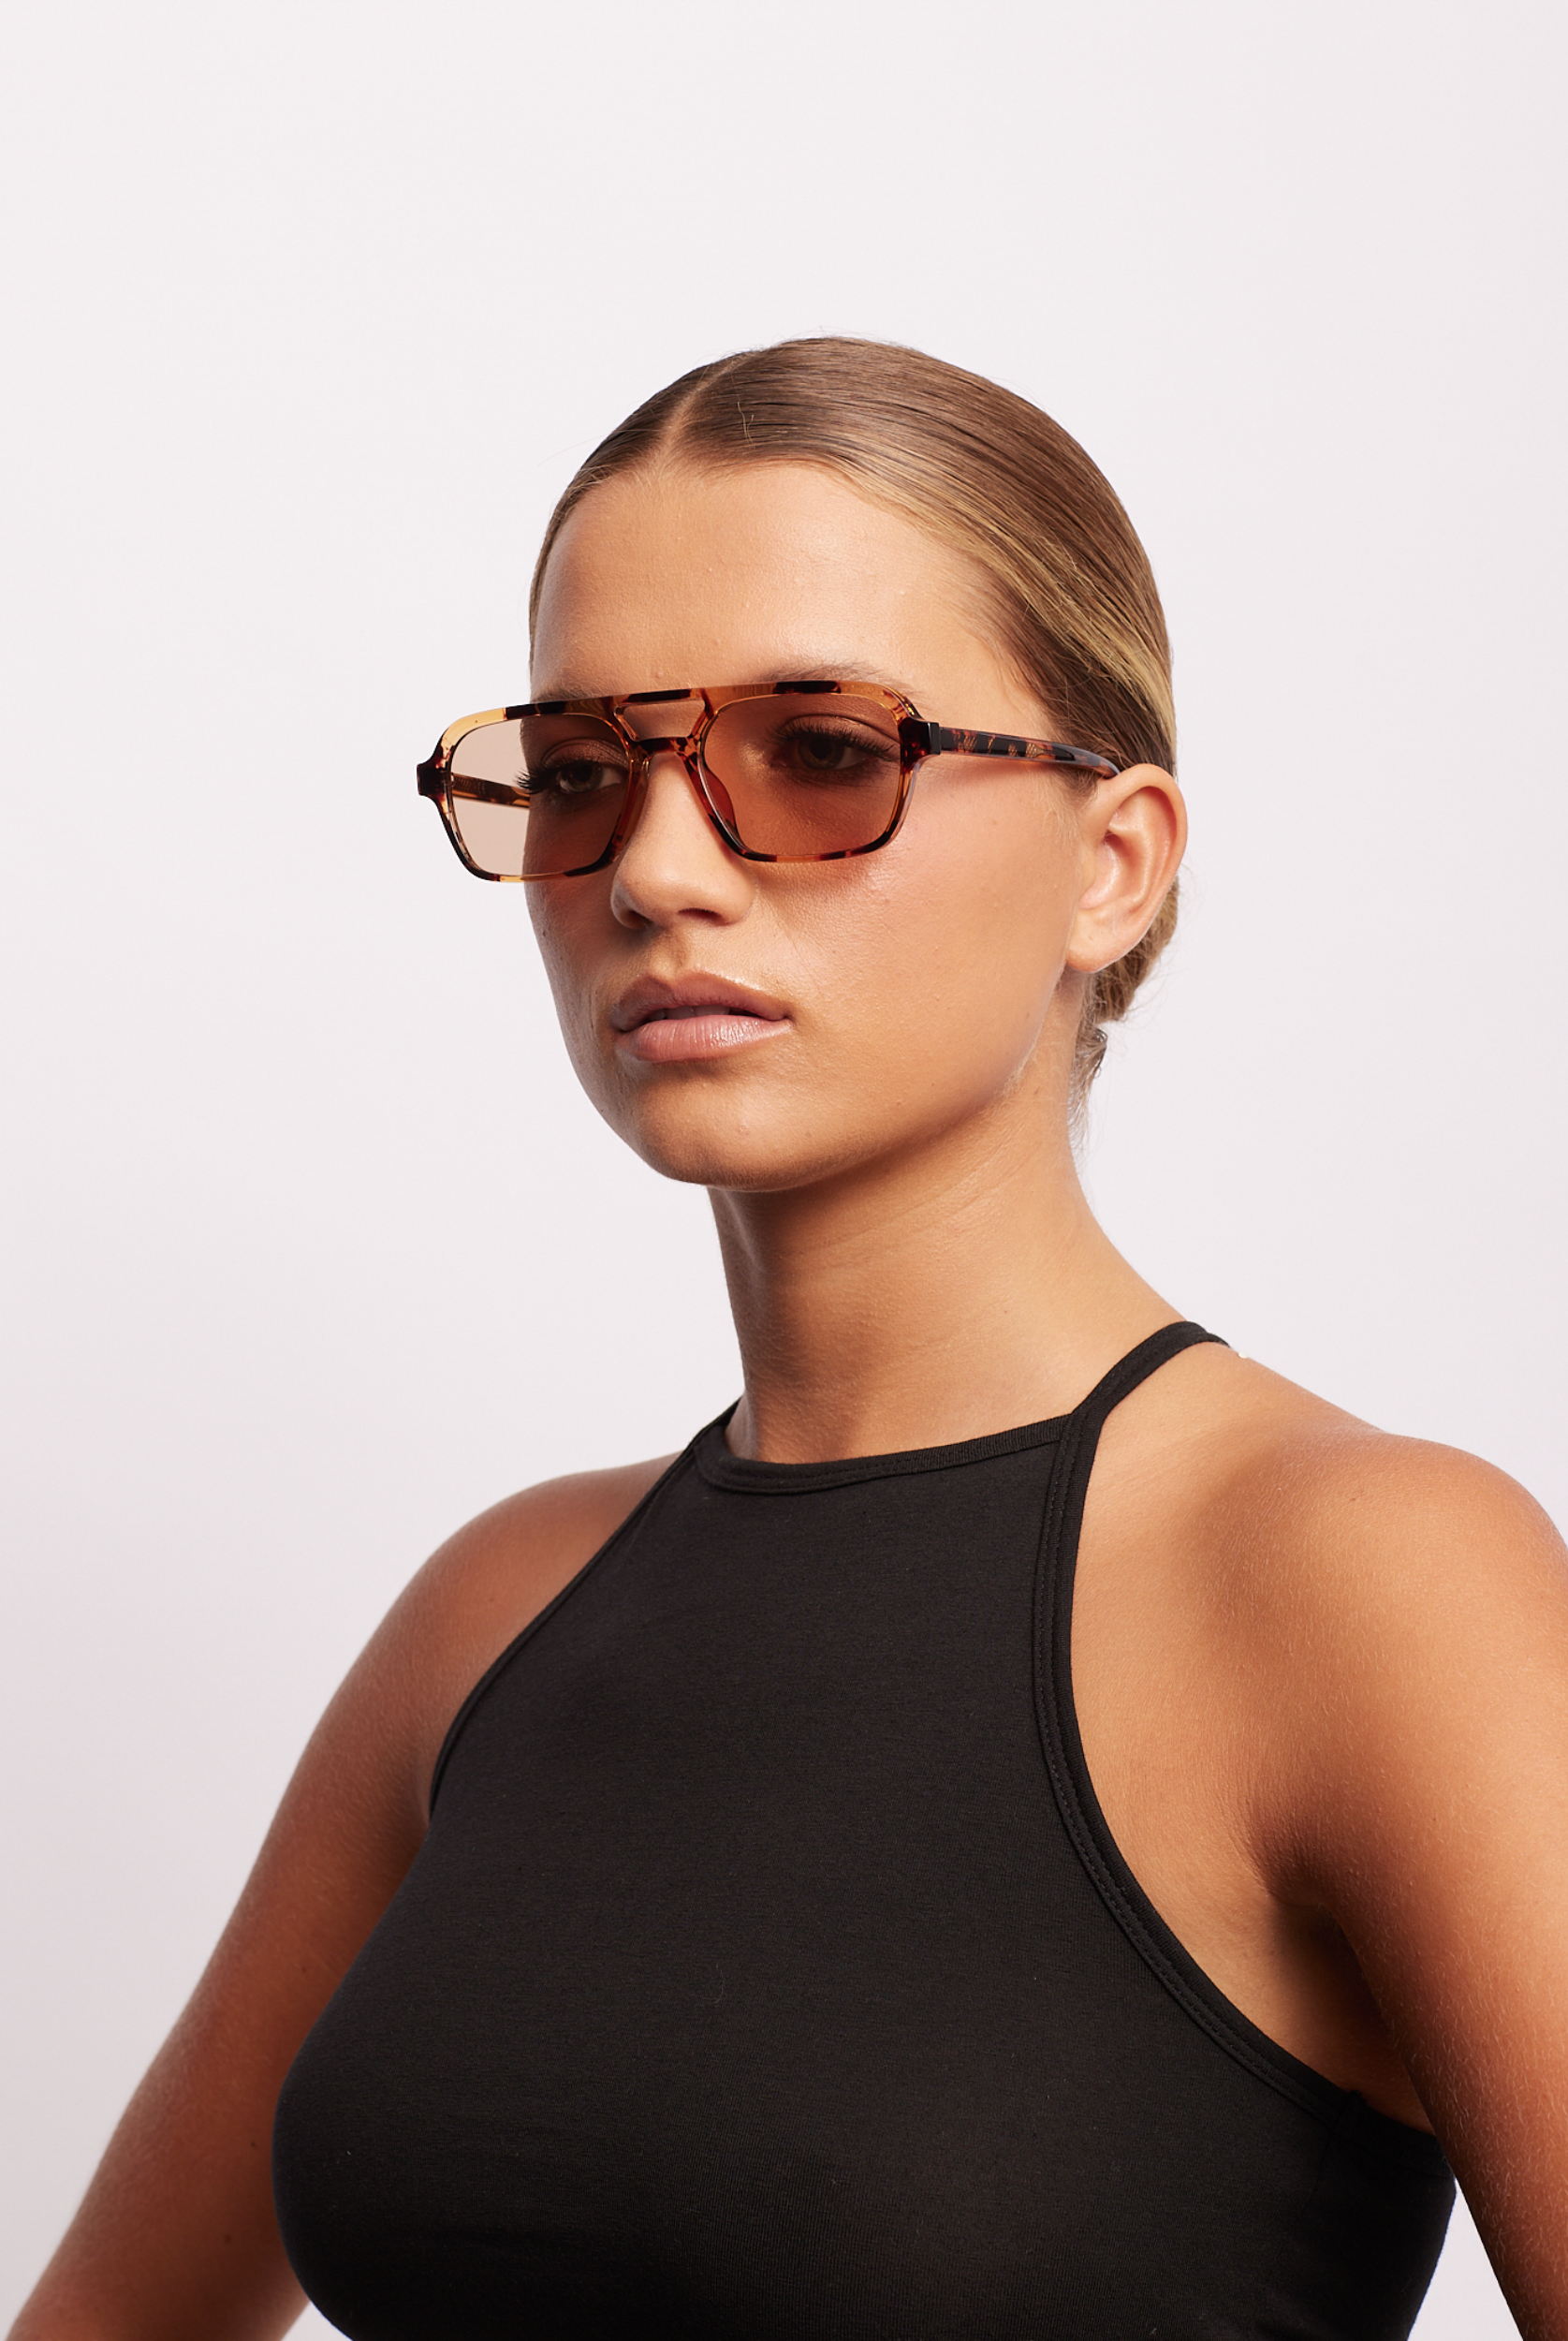 Model wearing the tomorrowland sunglasses is honey turtle